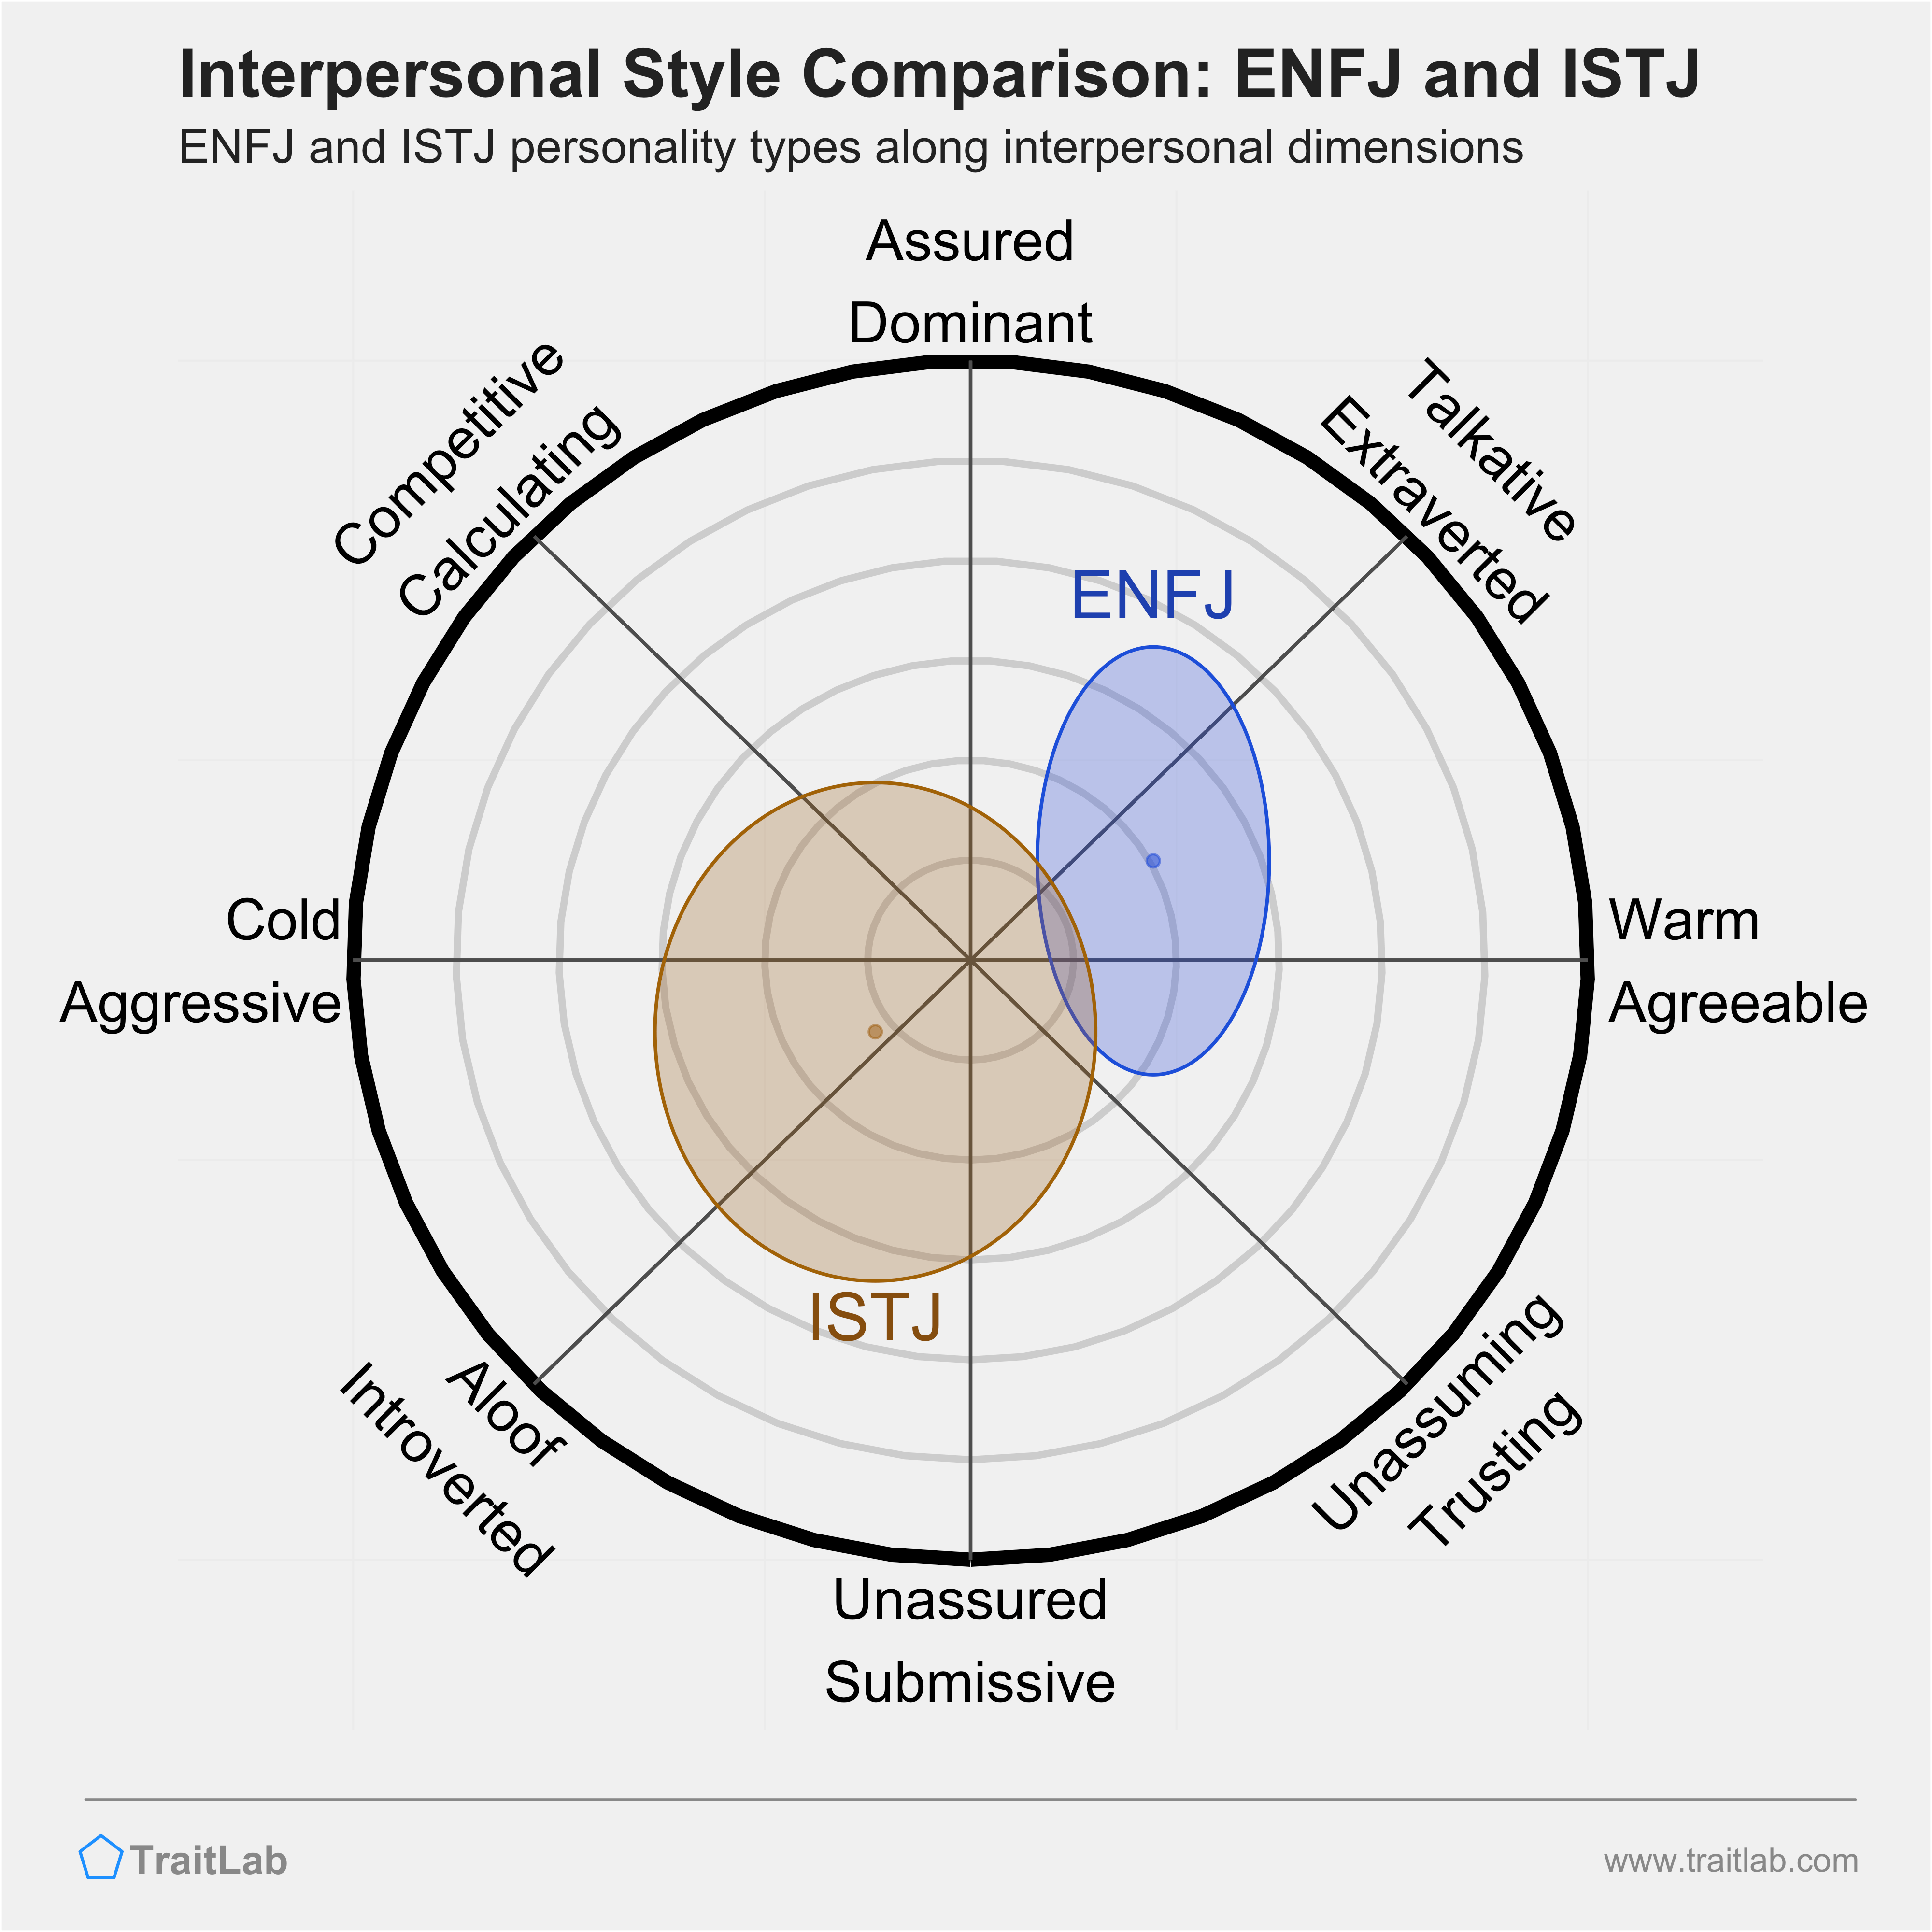 ENFJ and ISTJ comparison across interpersonal dimensions